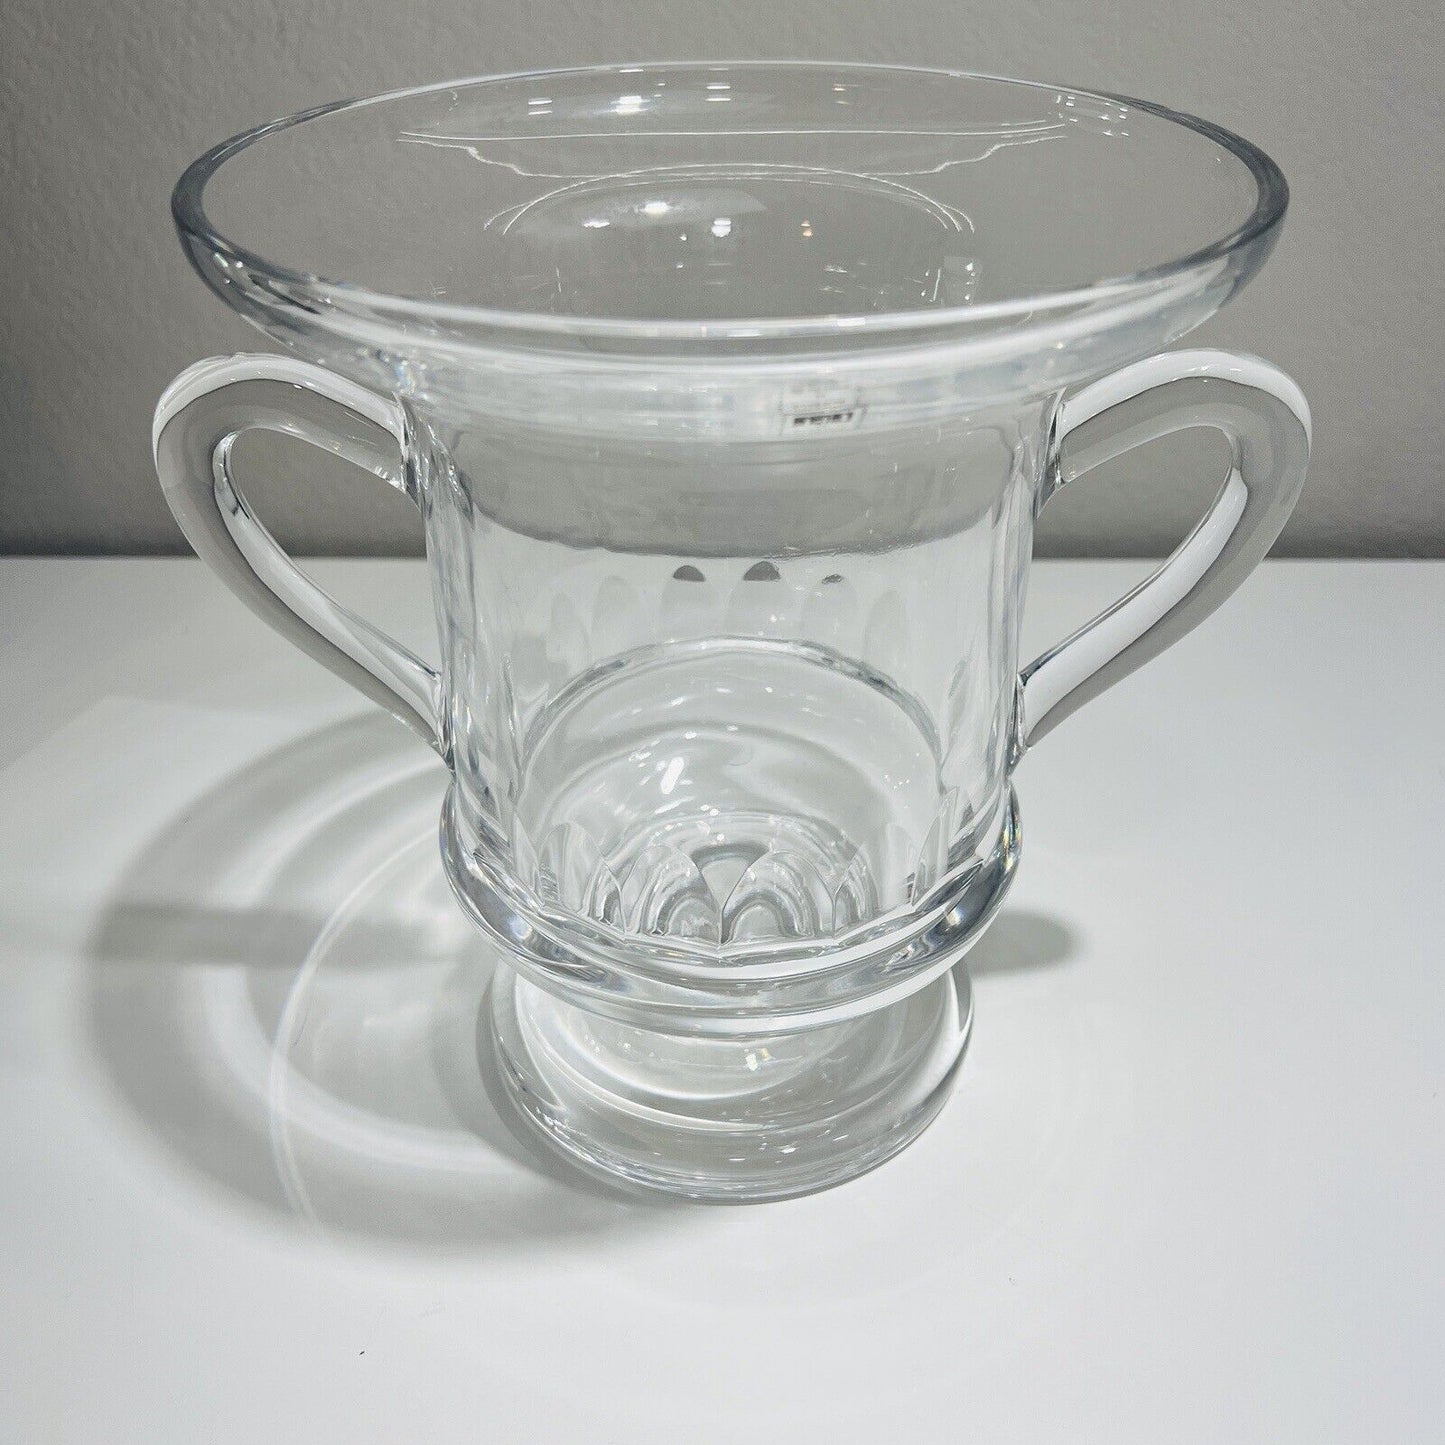 Mario Cioni Vase Crystal Large Pedestal Double Handles Glass Italy Urn Trophy